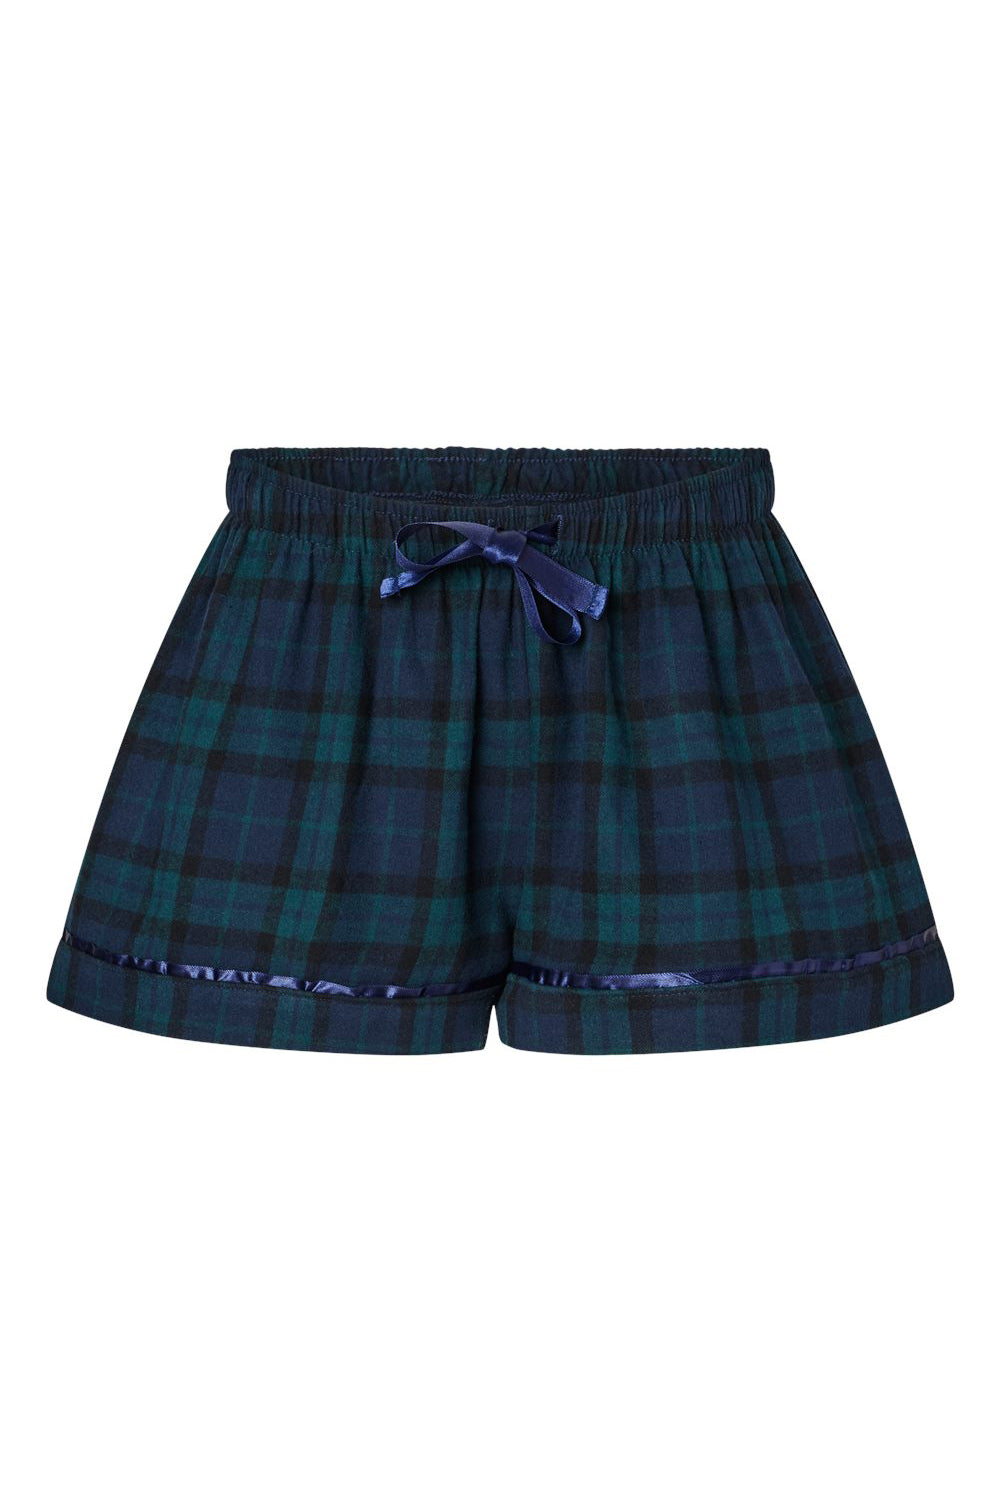 Boxercraft BW6501 Womens Flannel Shorts Scottish Tartan Flat Front